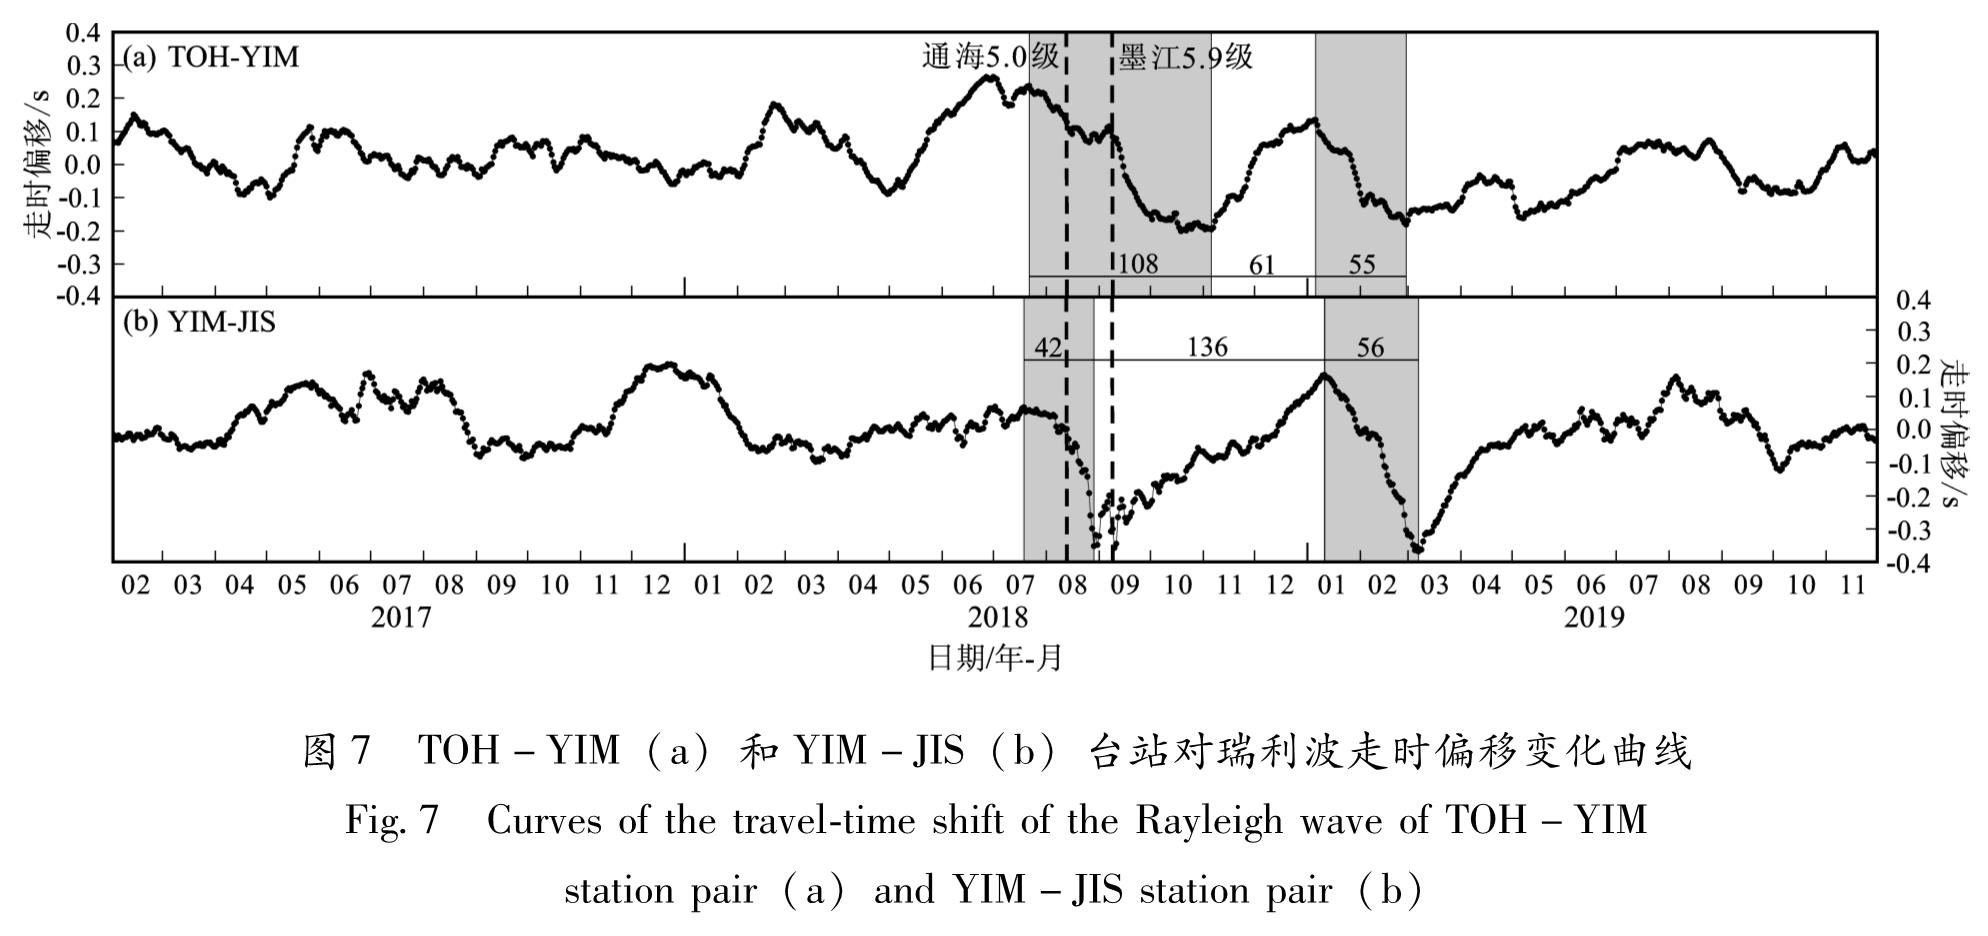 图7 TOH-YIM(a)和YIM-JIS(b)台站对瑞利波走时偏移变化曲线<br/>Fig.7 Curves of the travel-time shift of the Rayleigh wave of TOH-YIM station pair(a)and YIM-JIS station pair(b)